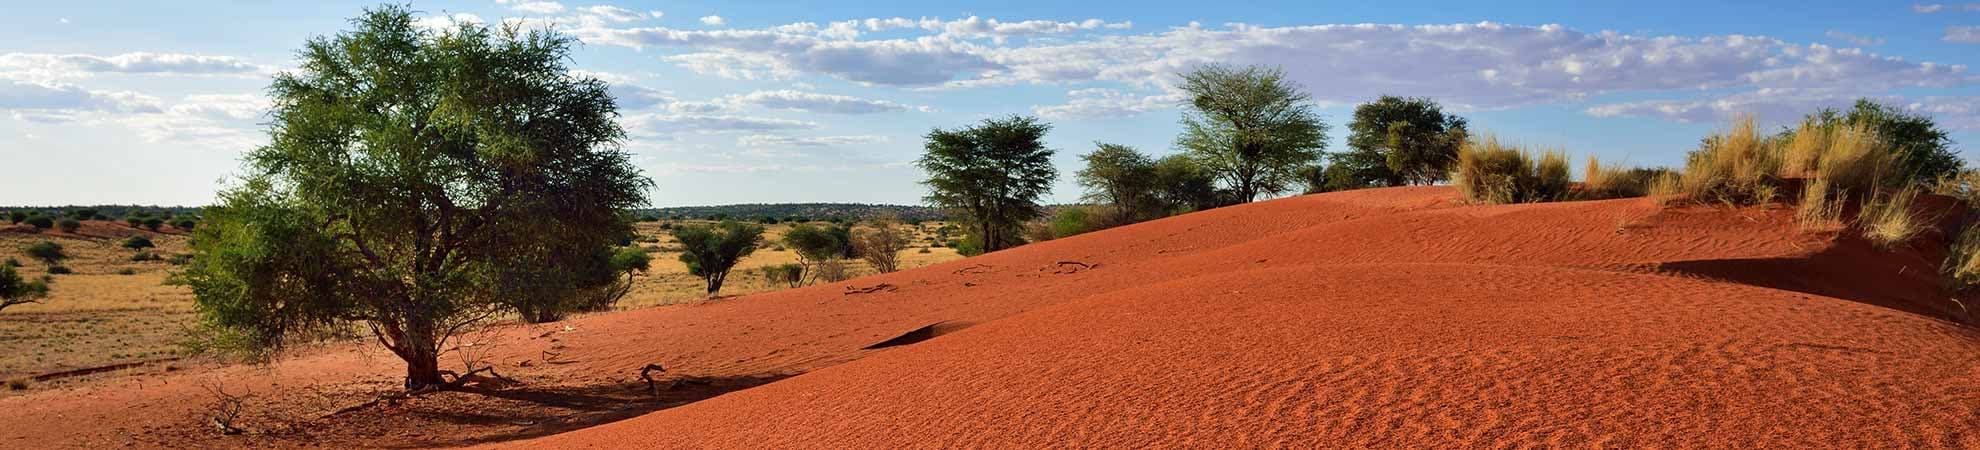 Voyage Le désert du Kalahari - Namibie